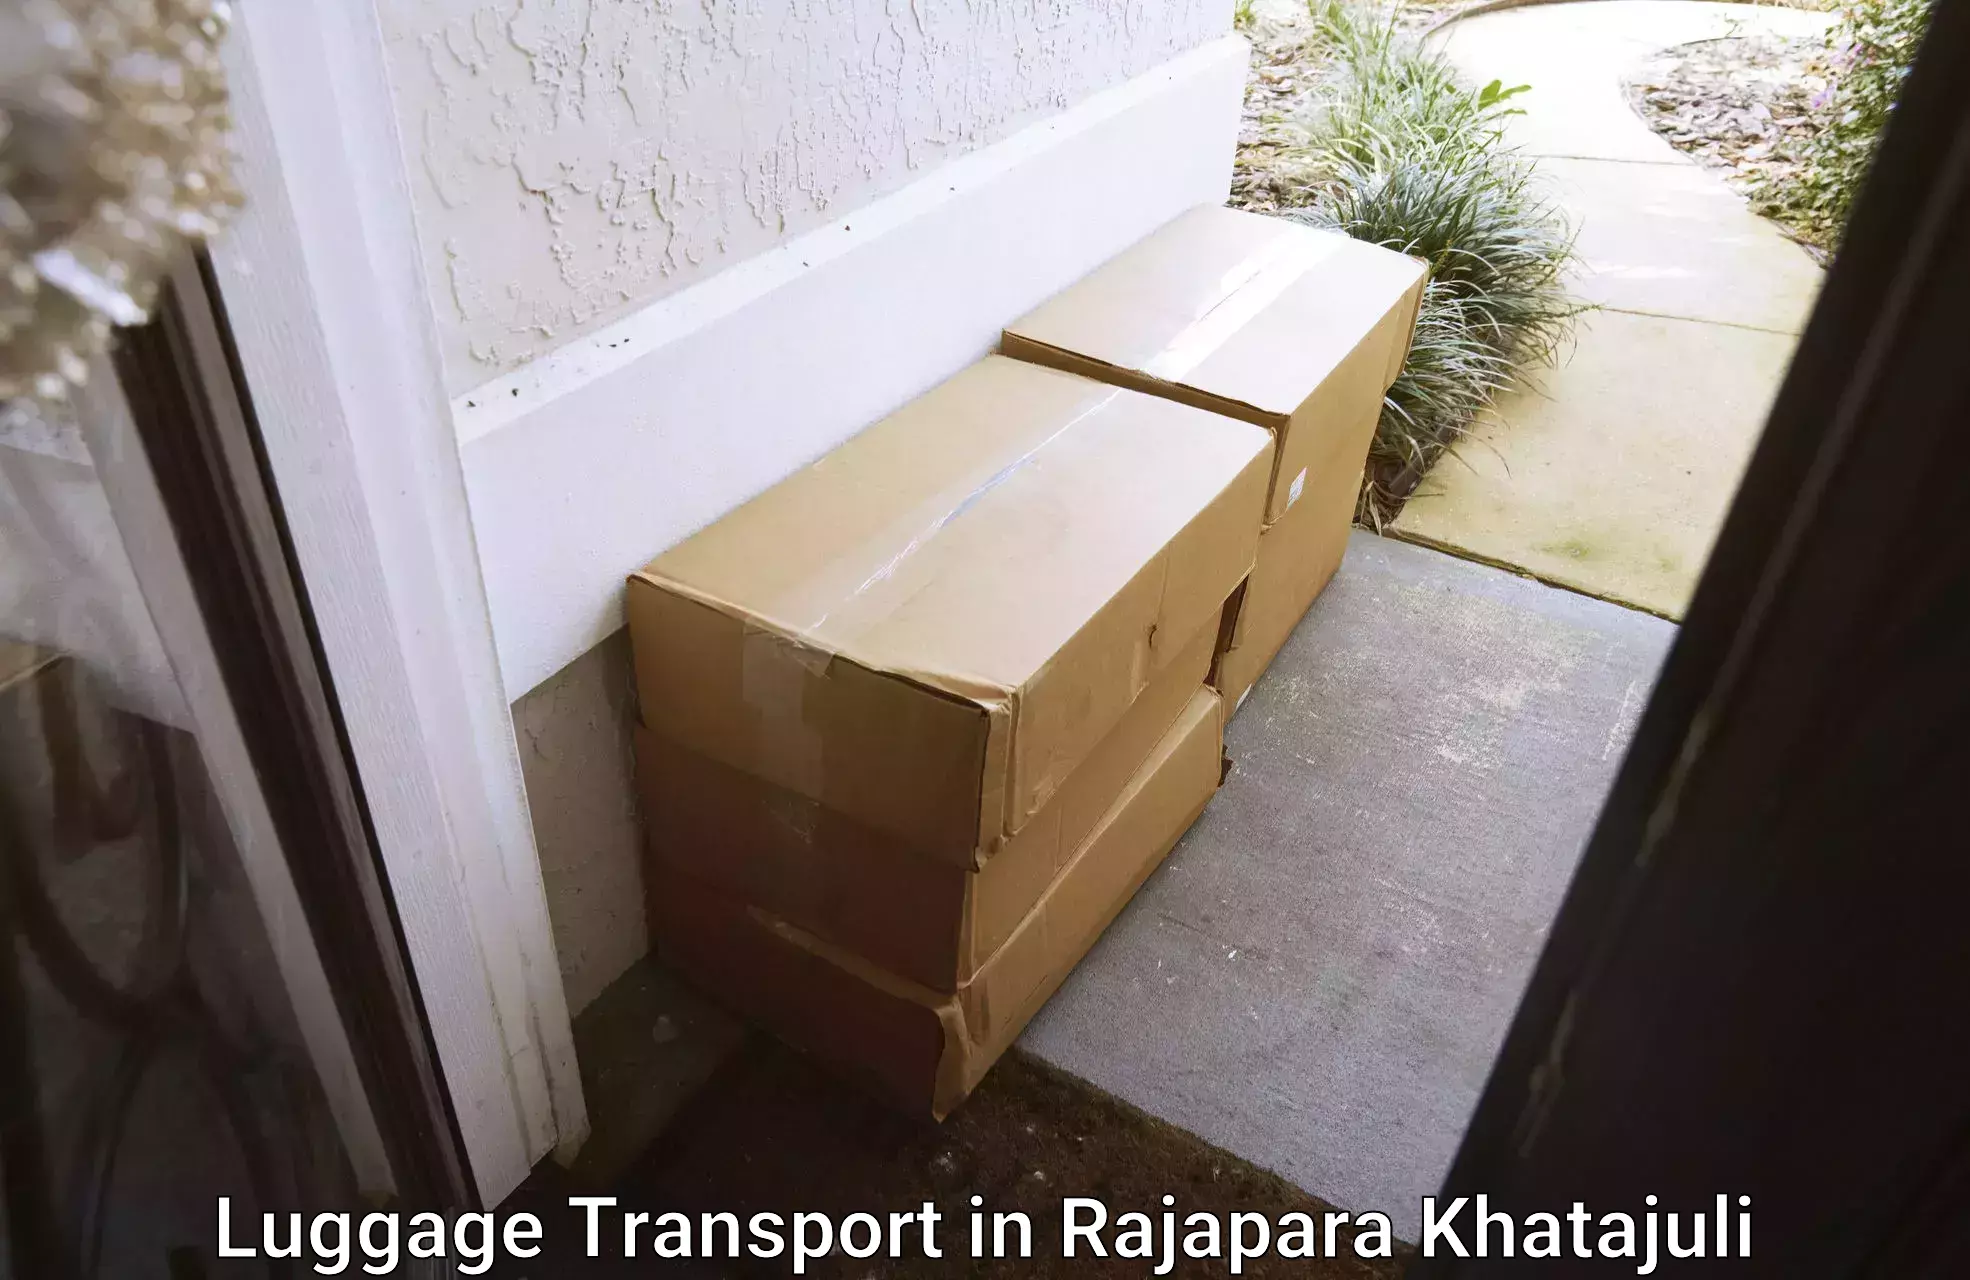 Luggage transport consultancy in Rajapara Khatajuli